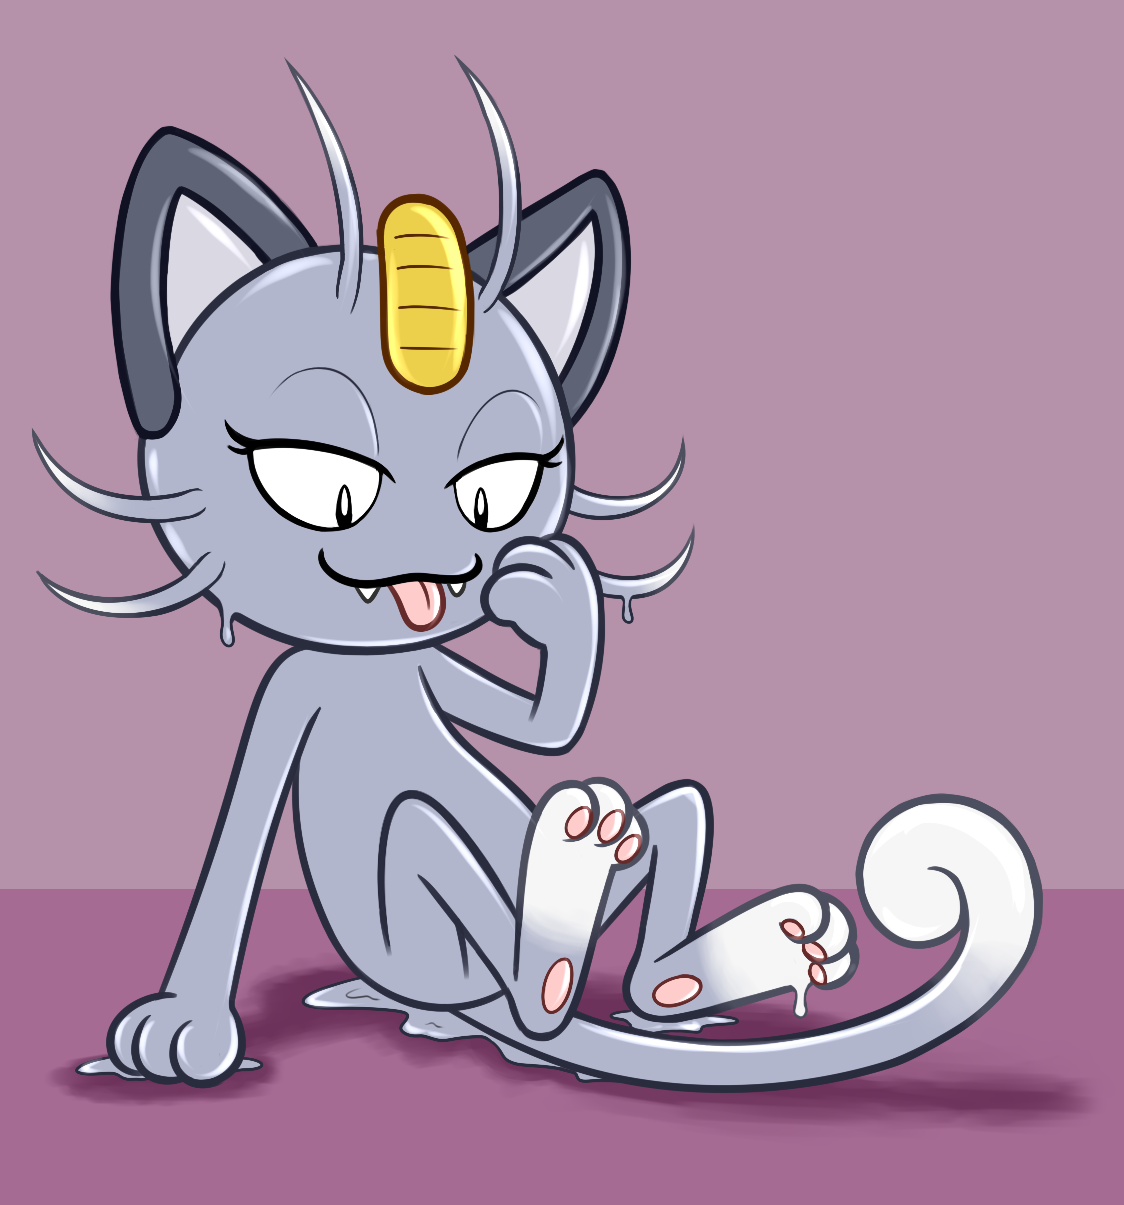 OoOoh! Good stretch, Meowth! 🐾 #Pokemon